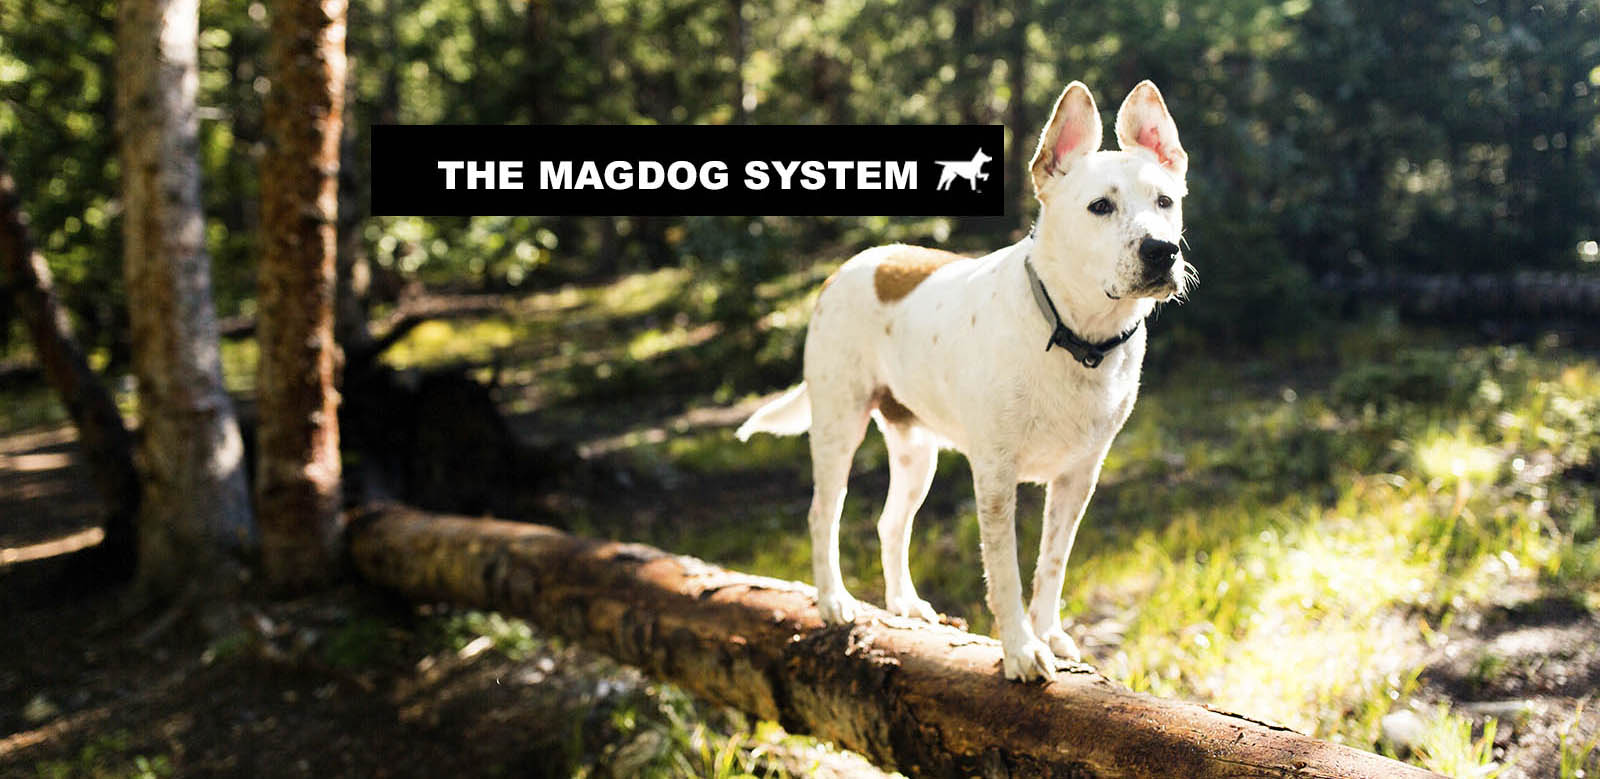 The MAGDOG System - MAGDOG, LLC